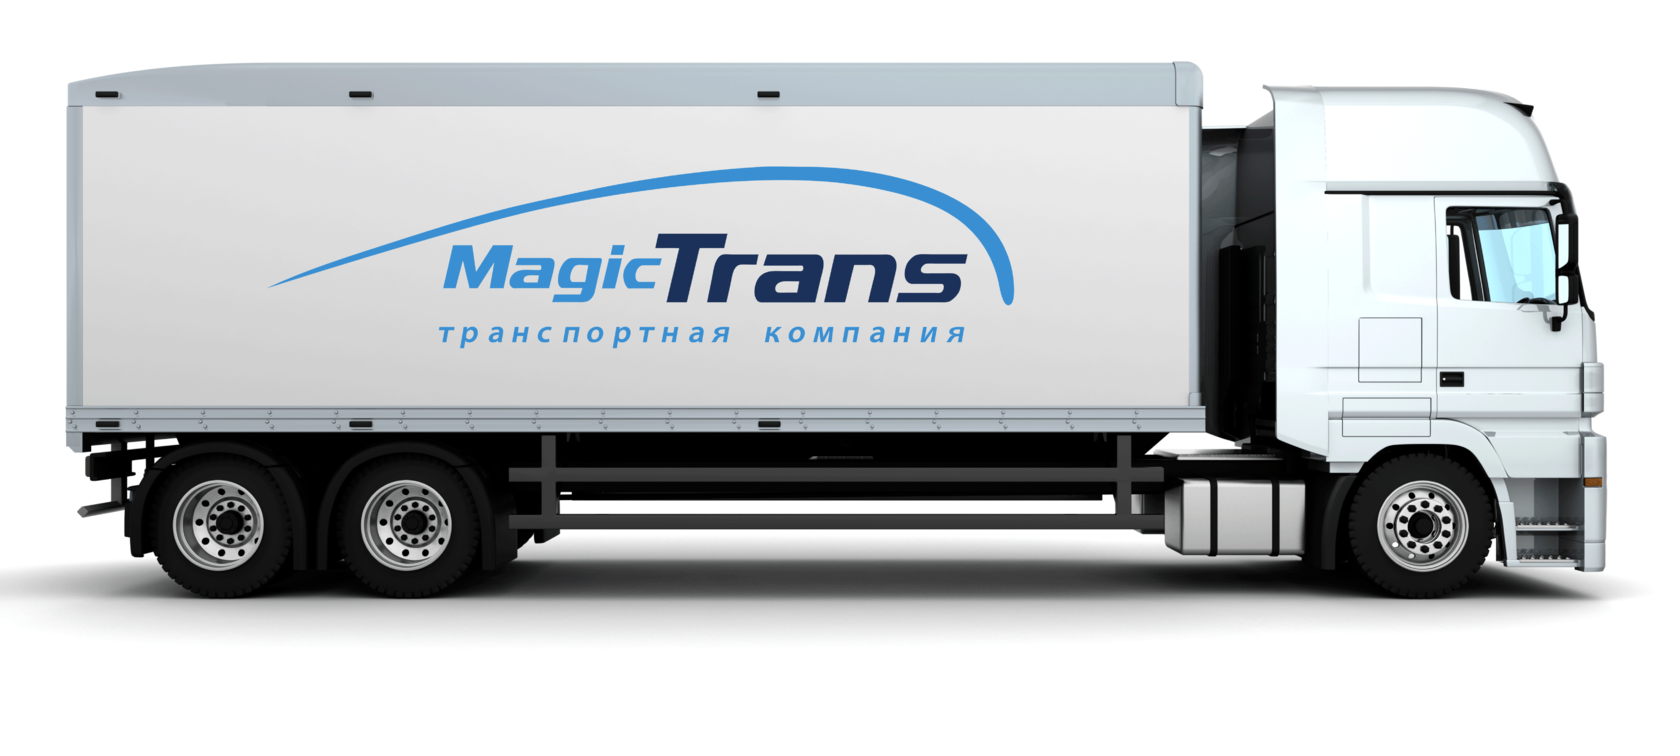 Magic trans транспортная. Мейджик транс транспортная компания. Мейджик транс транспортная компания лого. ТК Мейджик транс логотип. Фуры компании Magic Trans.